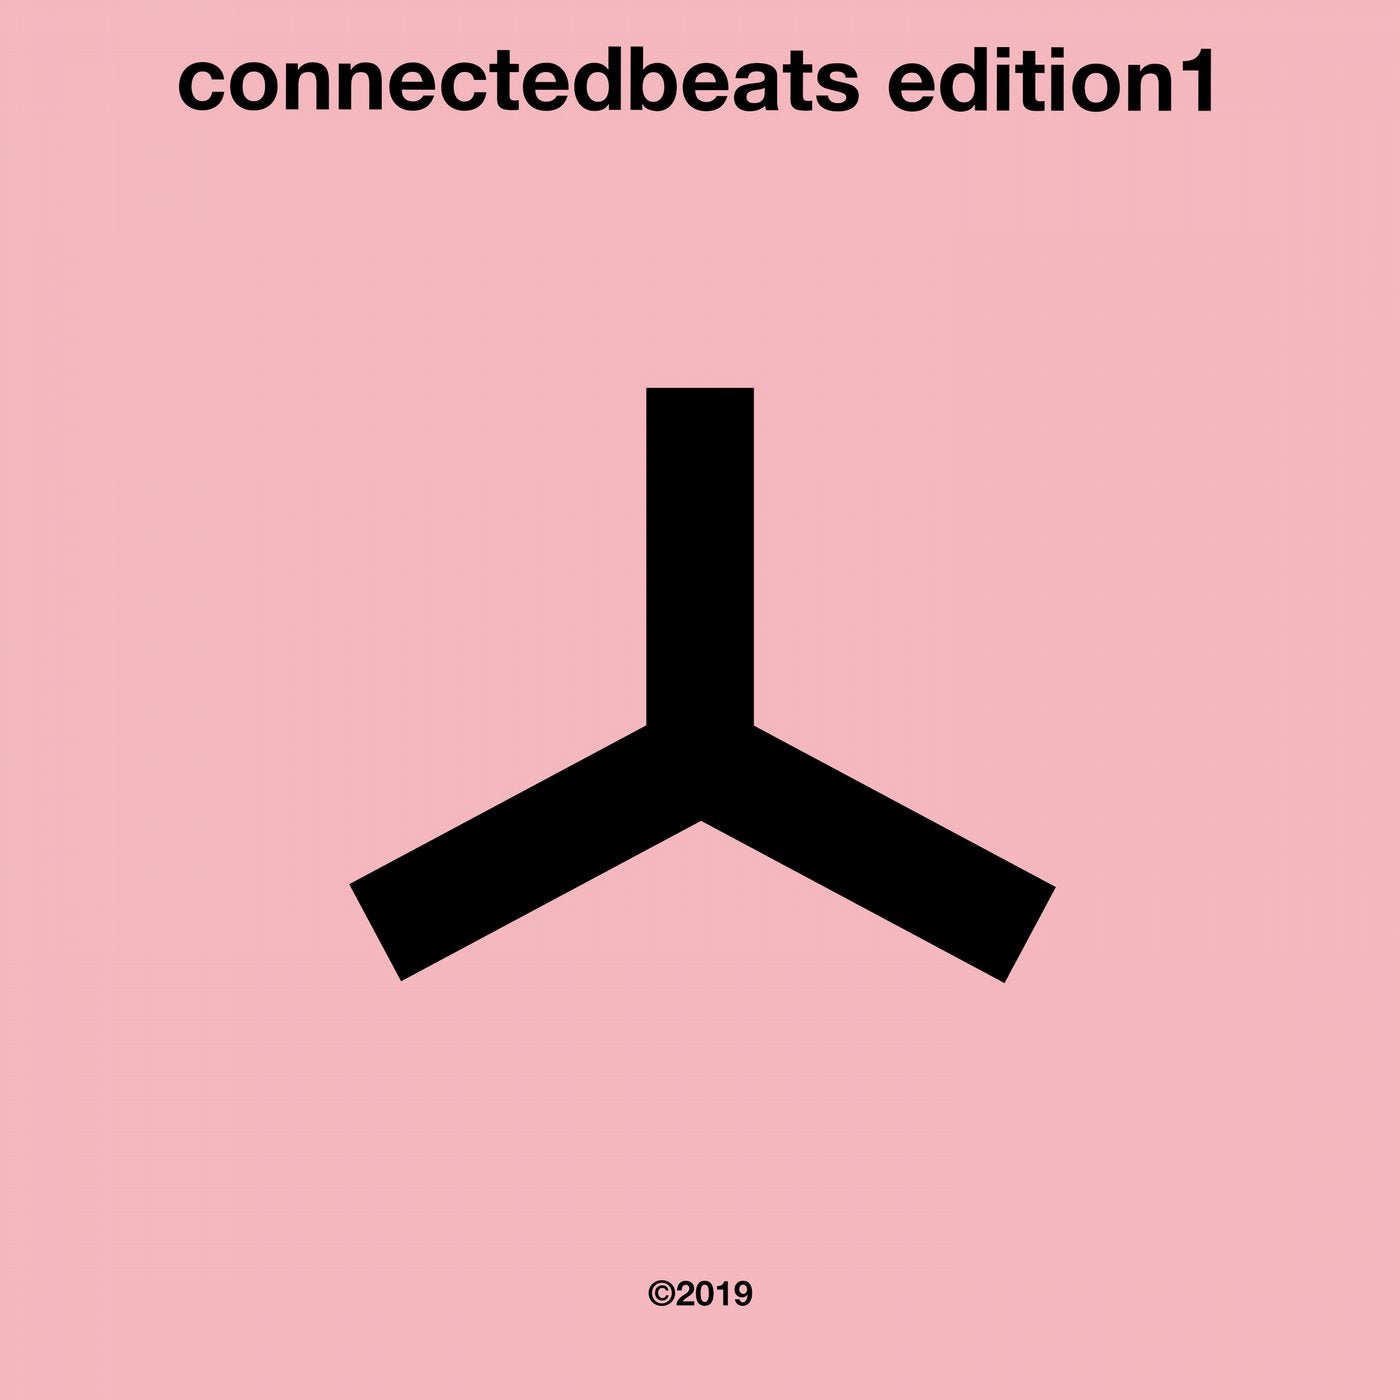 connectedbeats edition1